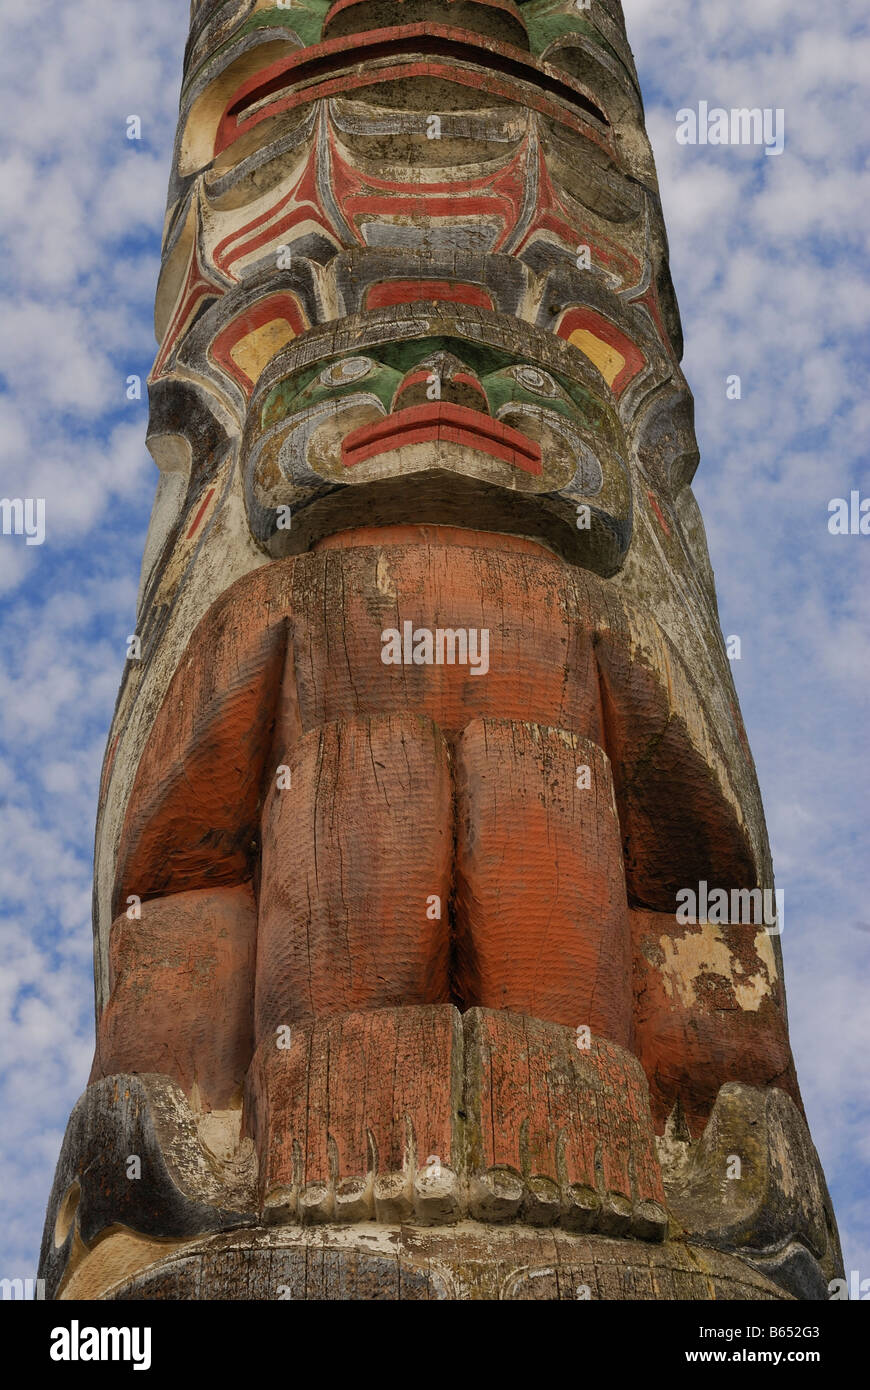 Totem haïda en bois l'art indien traditionnel Vancouver British Columbia canada Banque D'Images